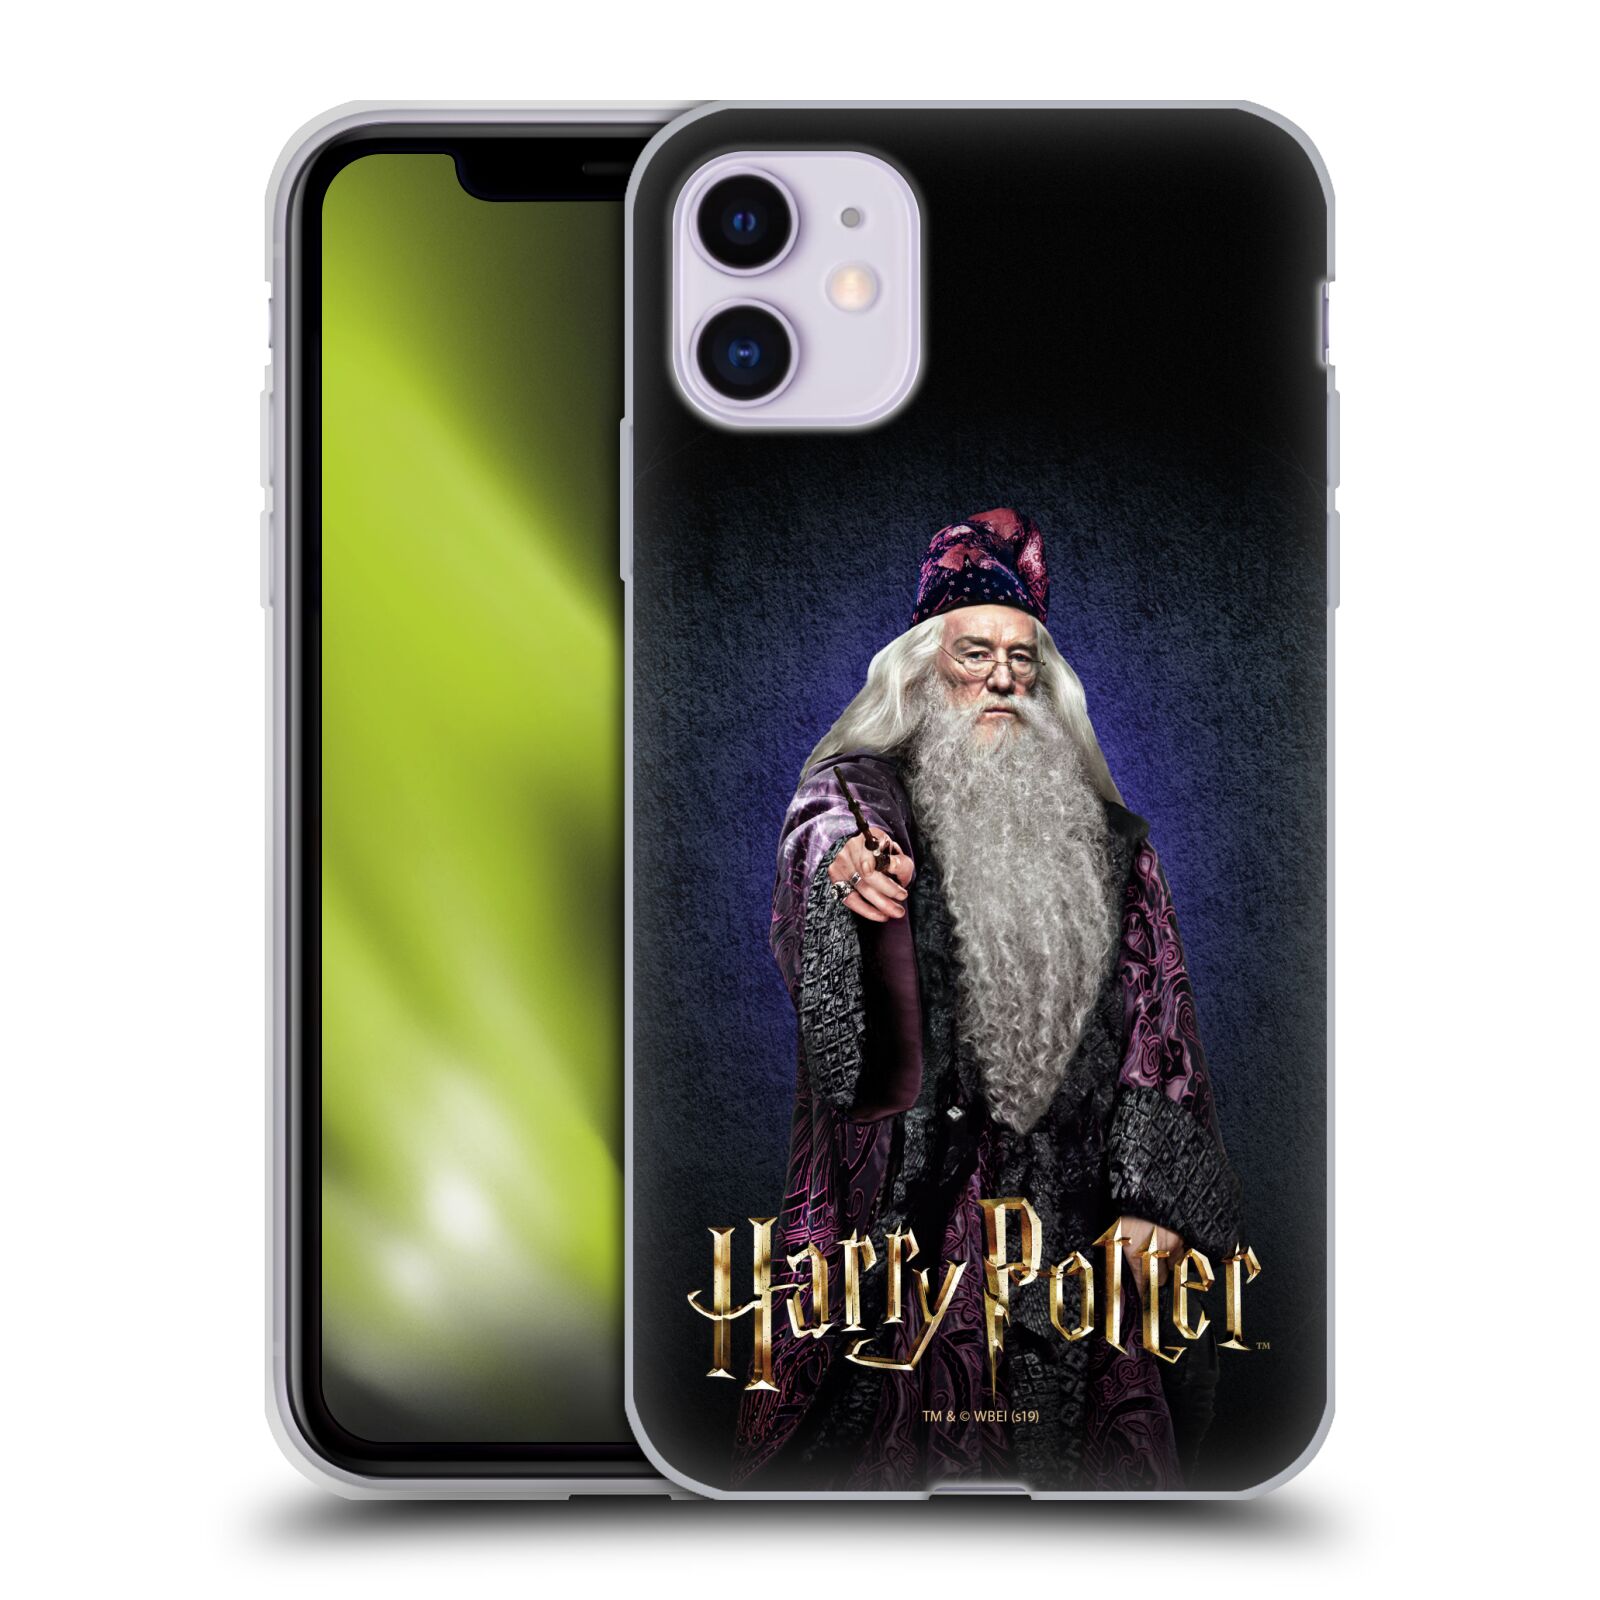 Silikonové pouzdro na mobil Apple iPhone 11 - Harry Potter - Albus Brumbál (Silikonový kryt, obal, pouzdro na mobilní telefon Apple iPhone 11 s displejem 6,1" s licencovaným motivem Harry Potter - Albus Brumbál)